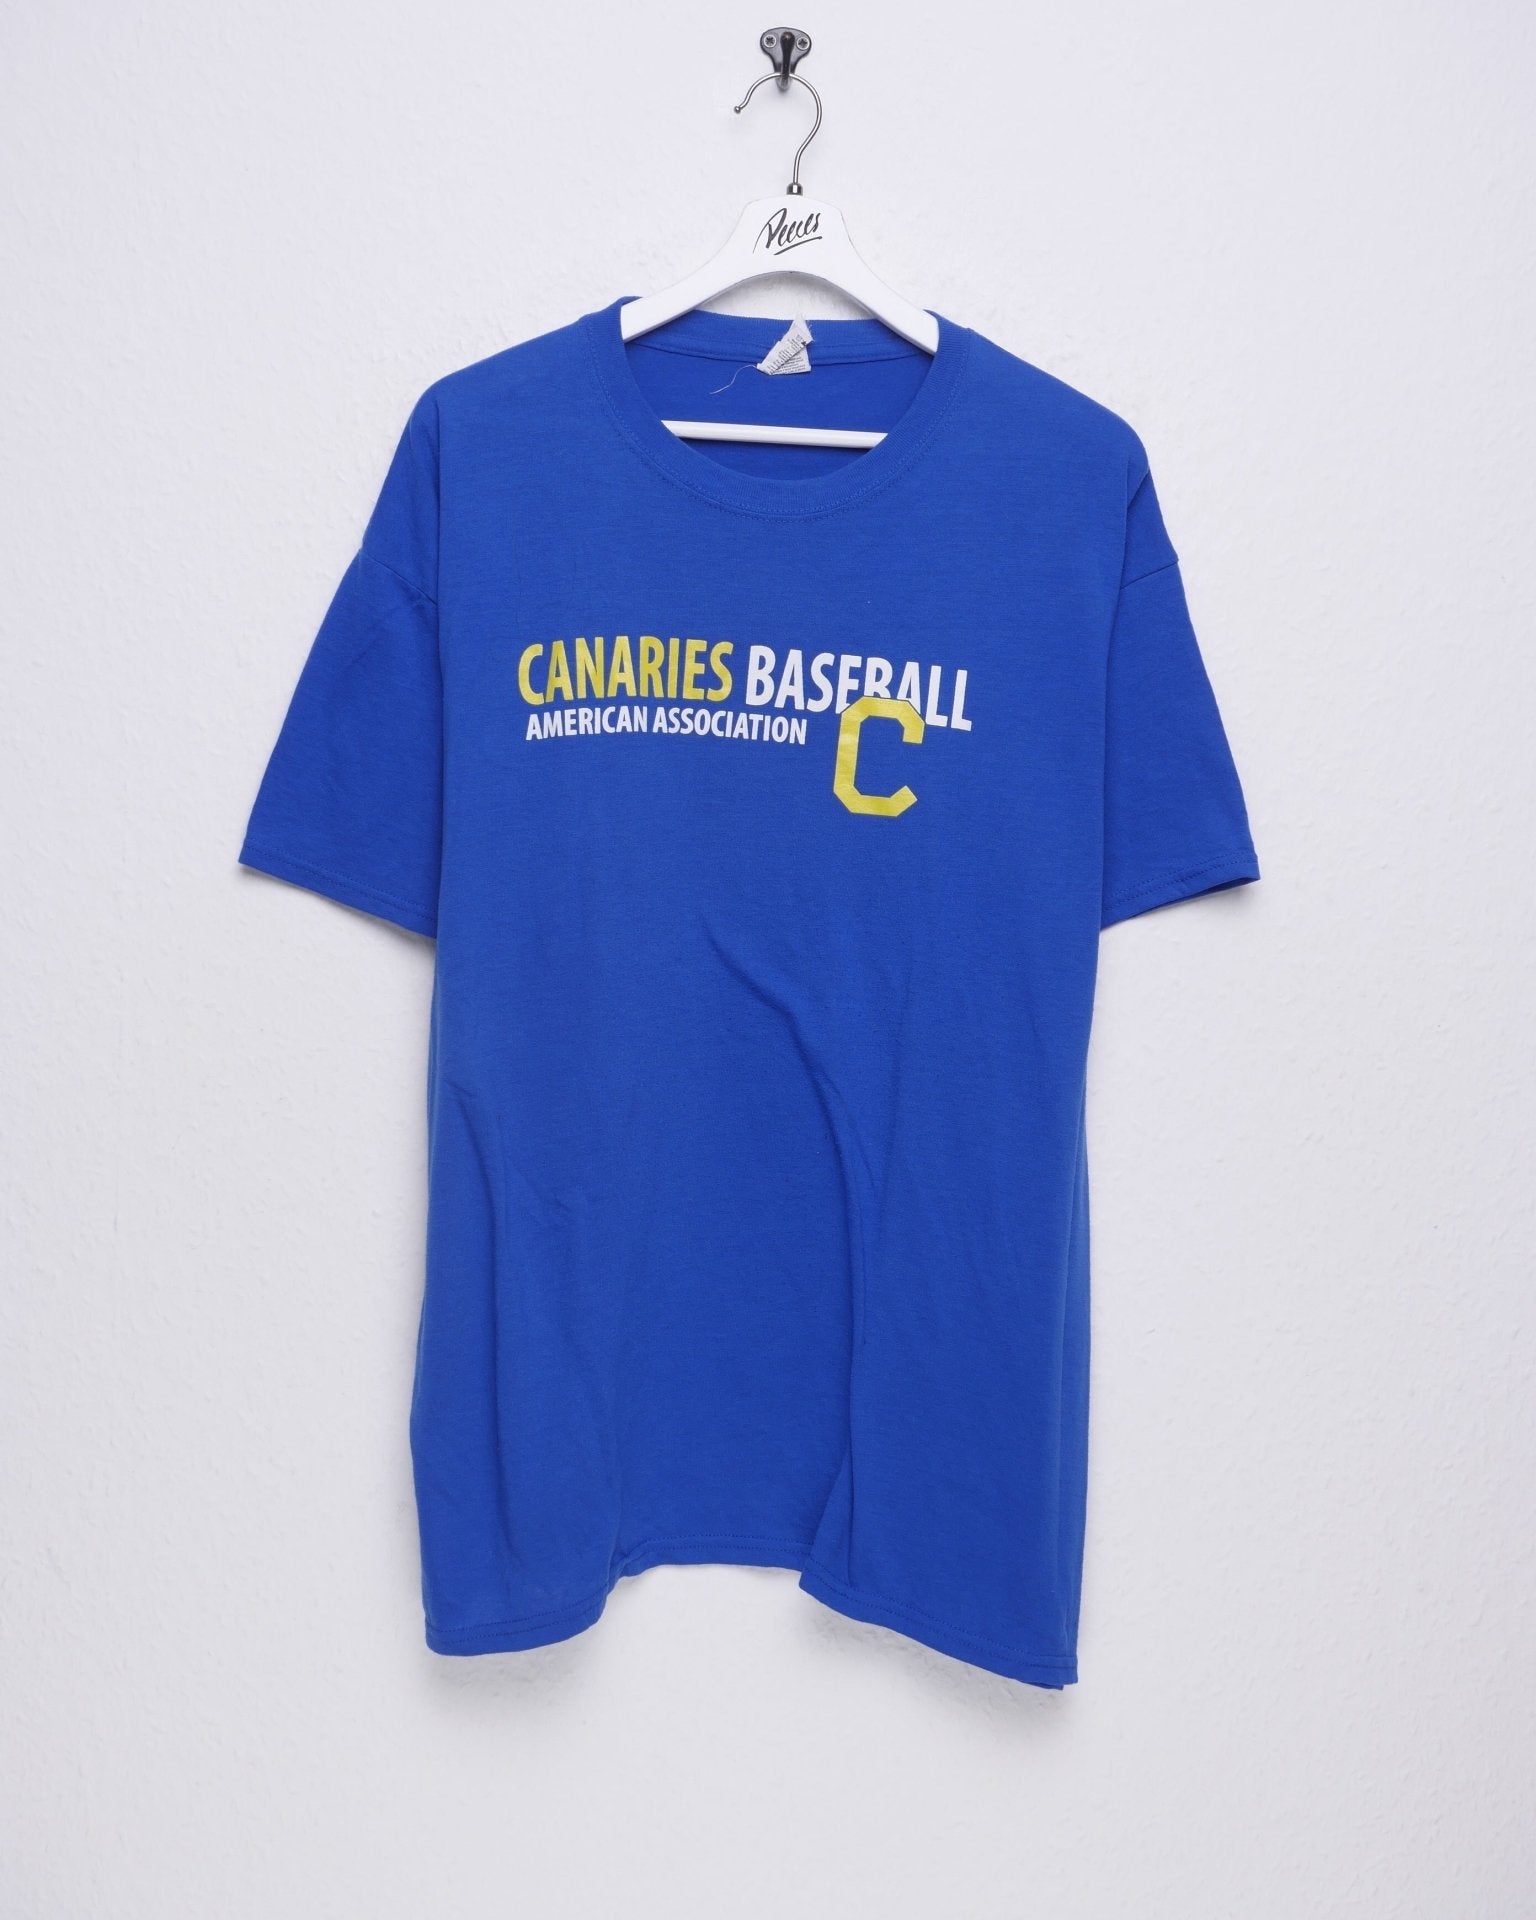 Canaries Baseball printed Spellout Vintage Shirt - Peeces